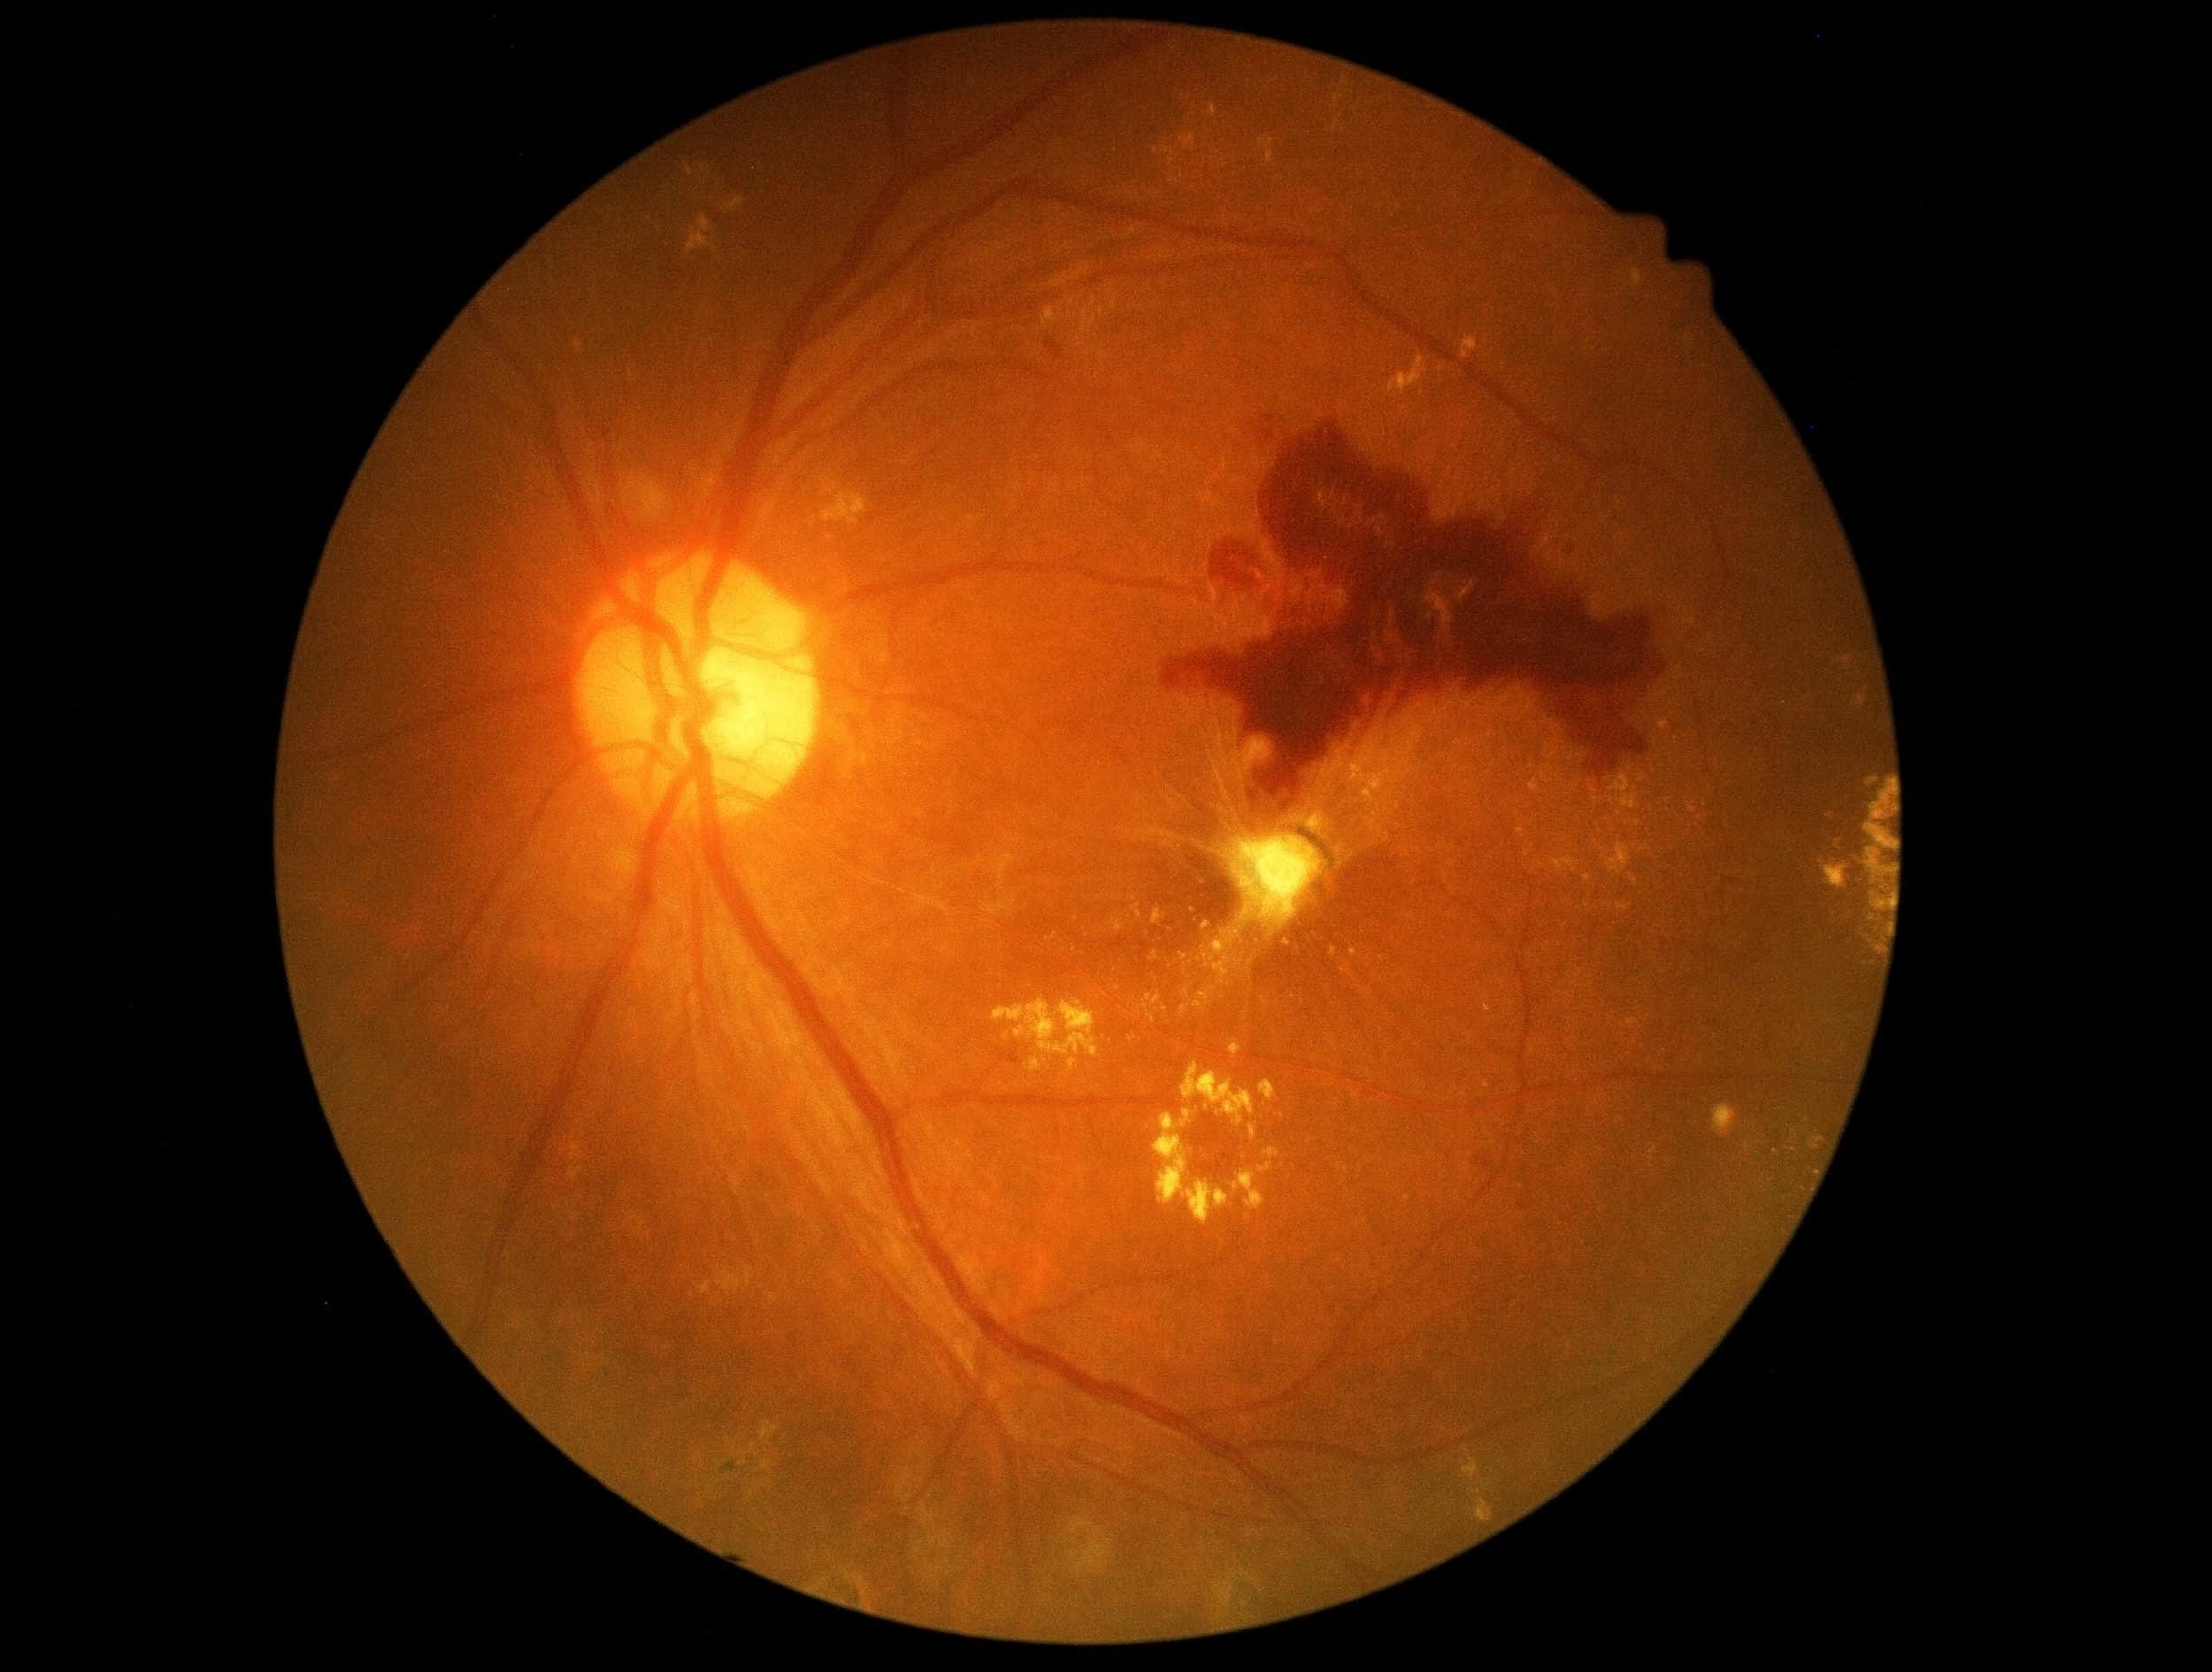 Retina of diabetic - diabetic retinophaty